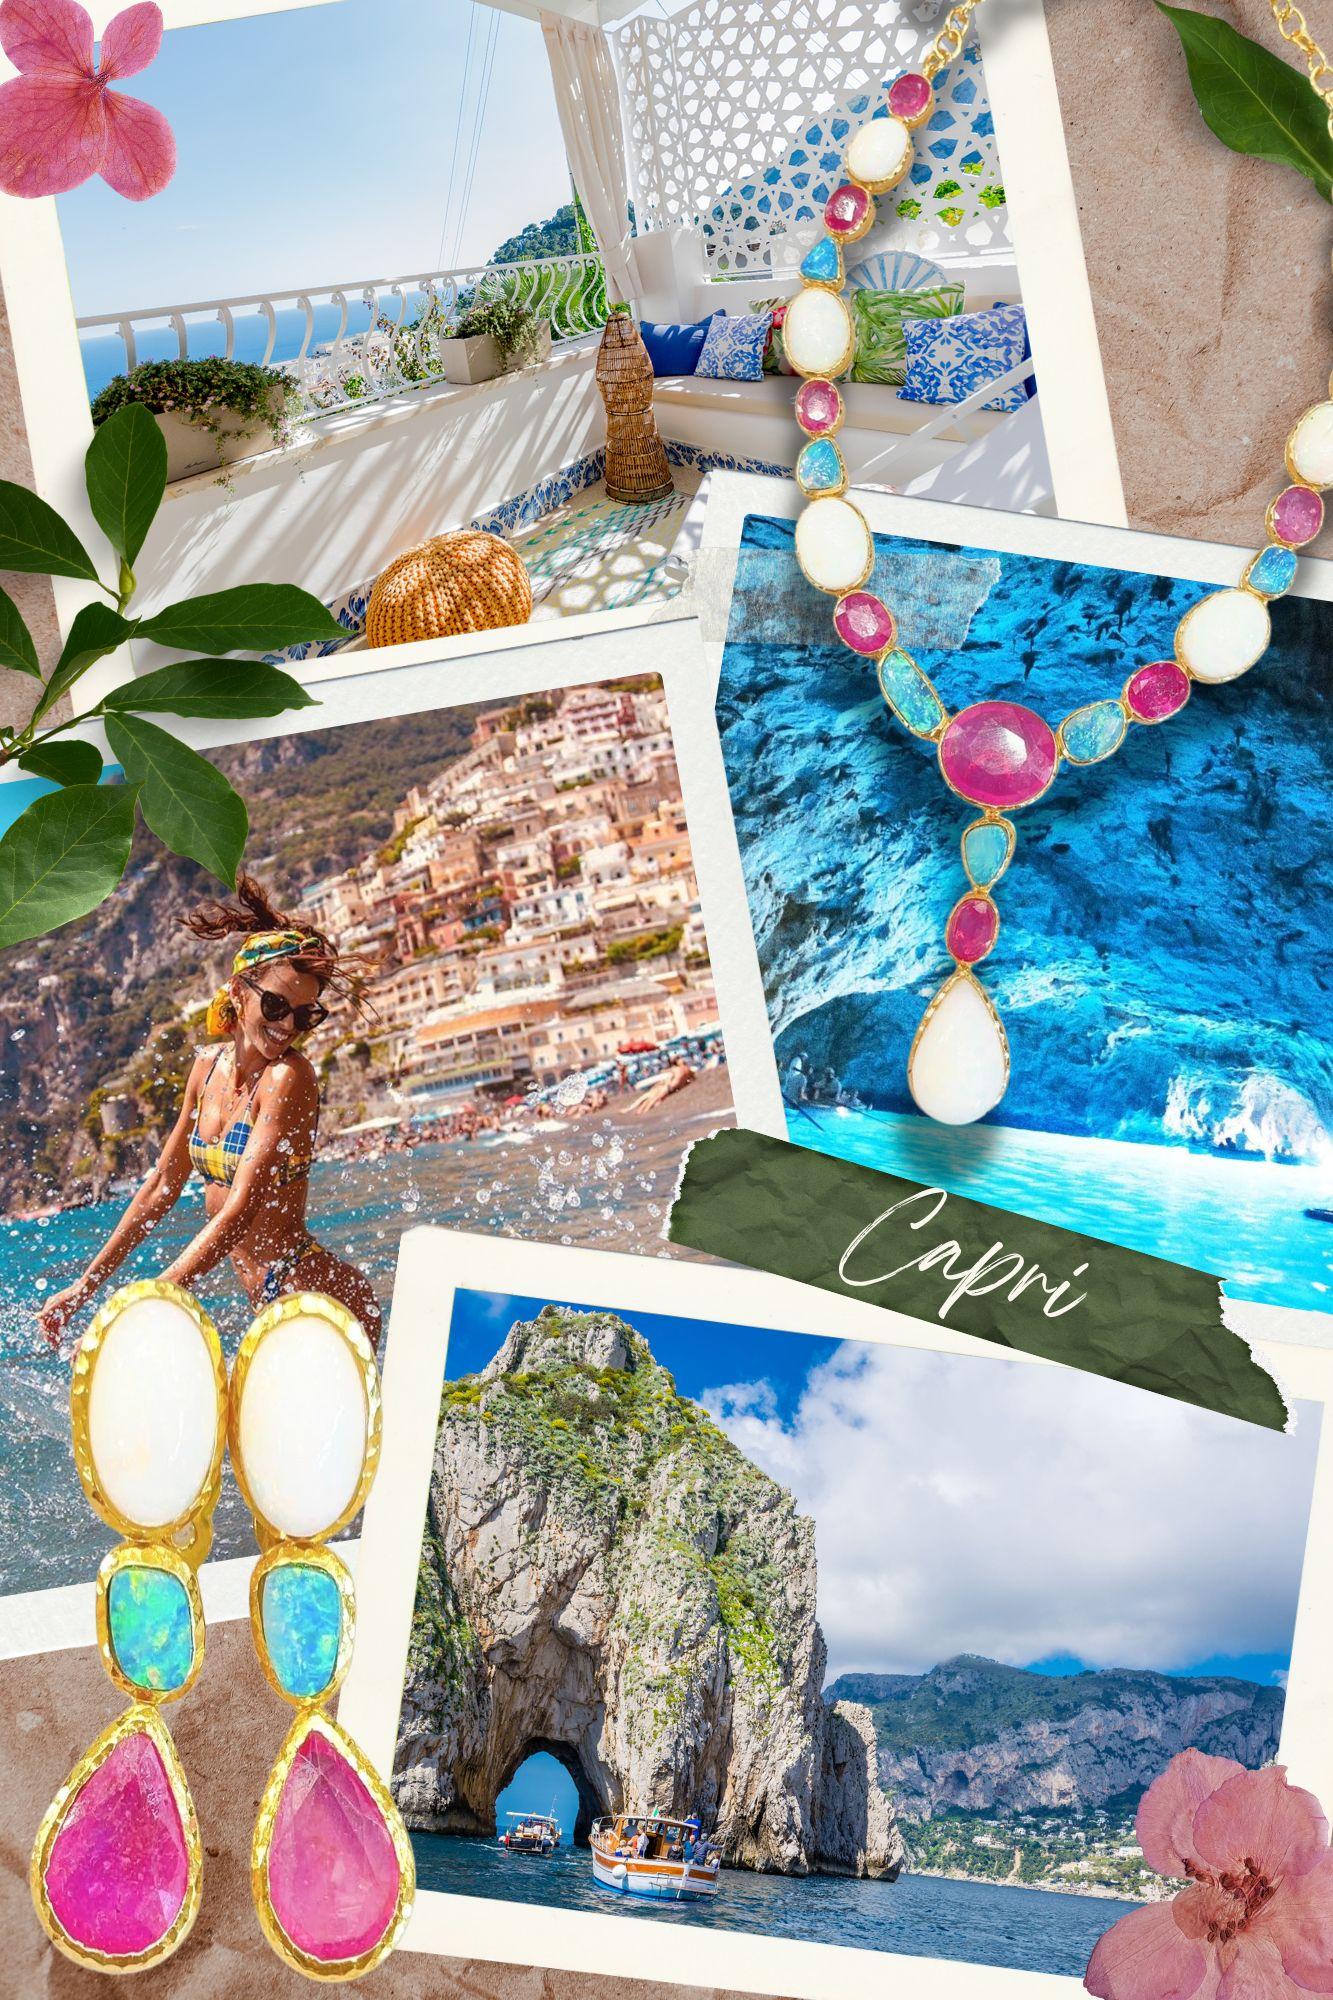 Bochic “Capri” Ruby & Carsidoni Stunning Necklace set in 22K Gold & Silver  4